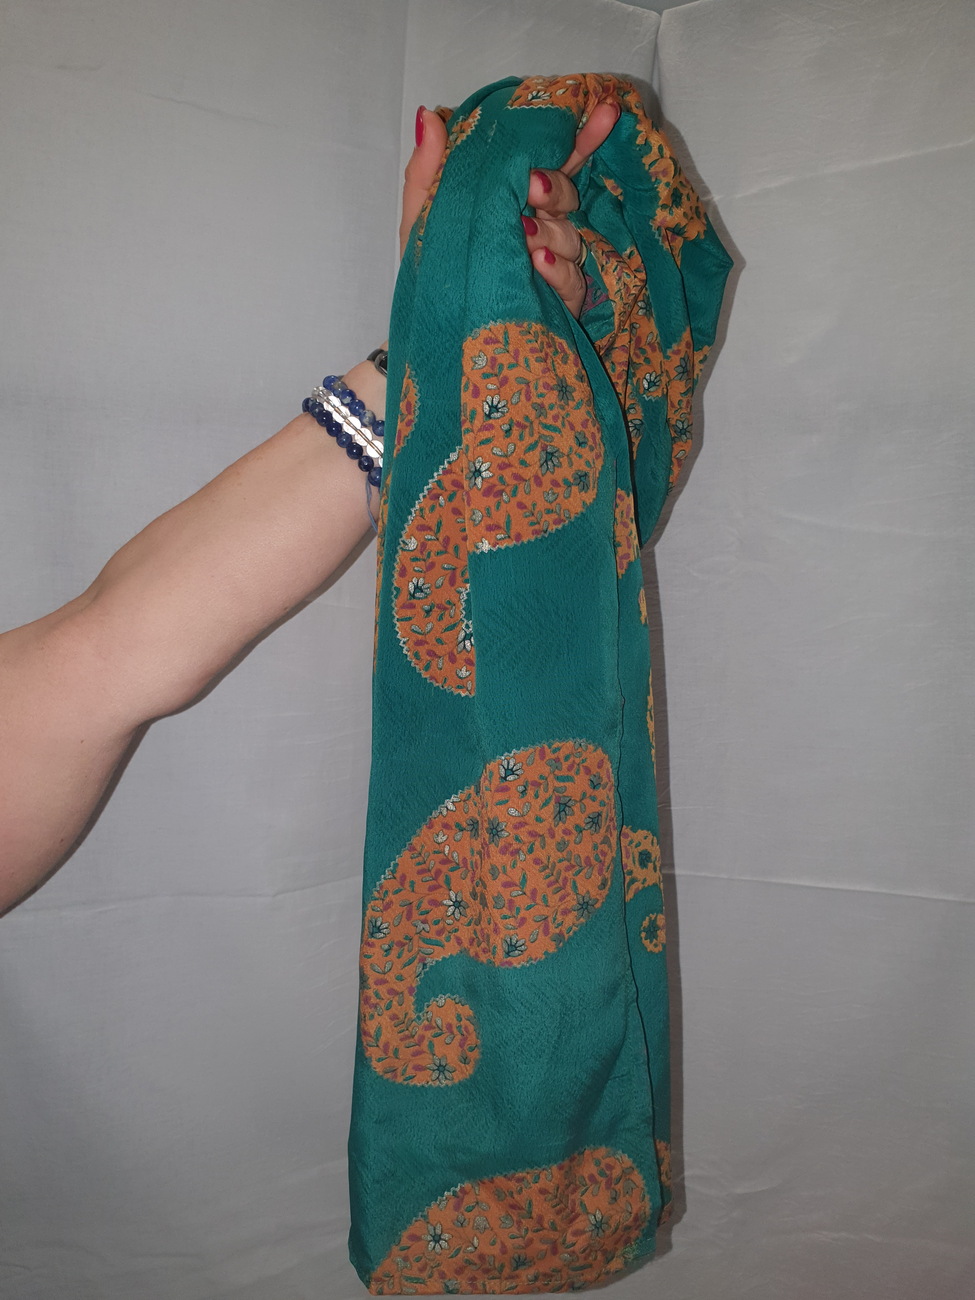 Foulard made in india 100% viscosa con borsa porta foulard fantasia 14